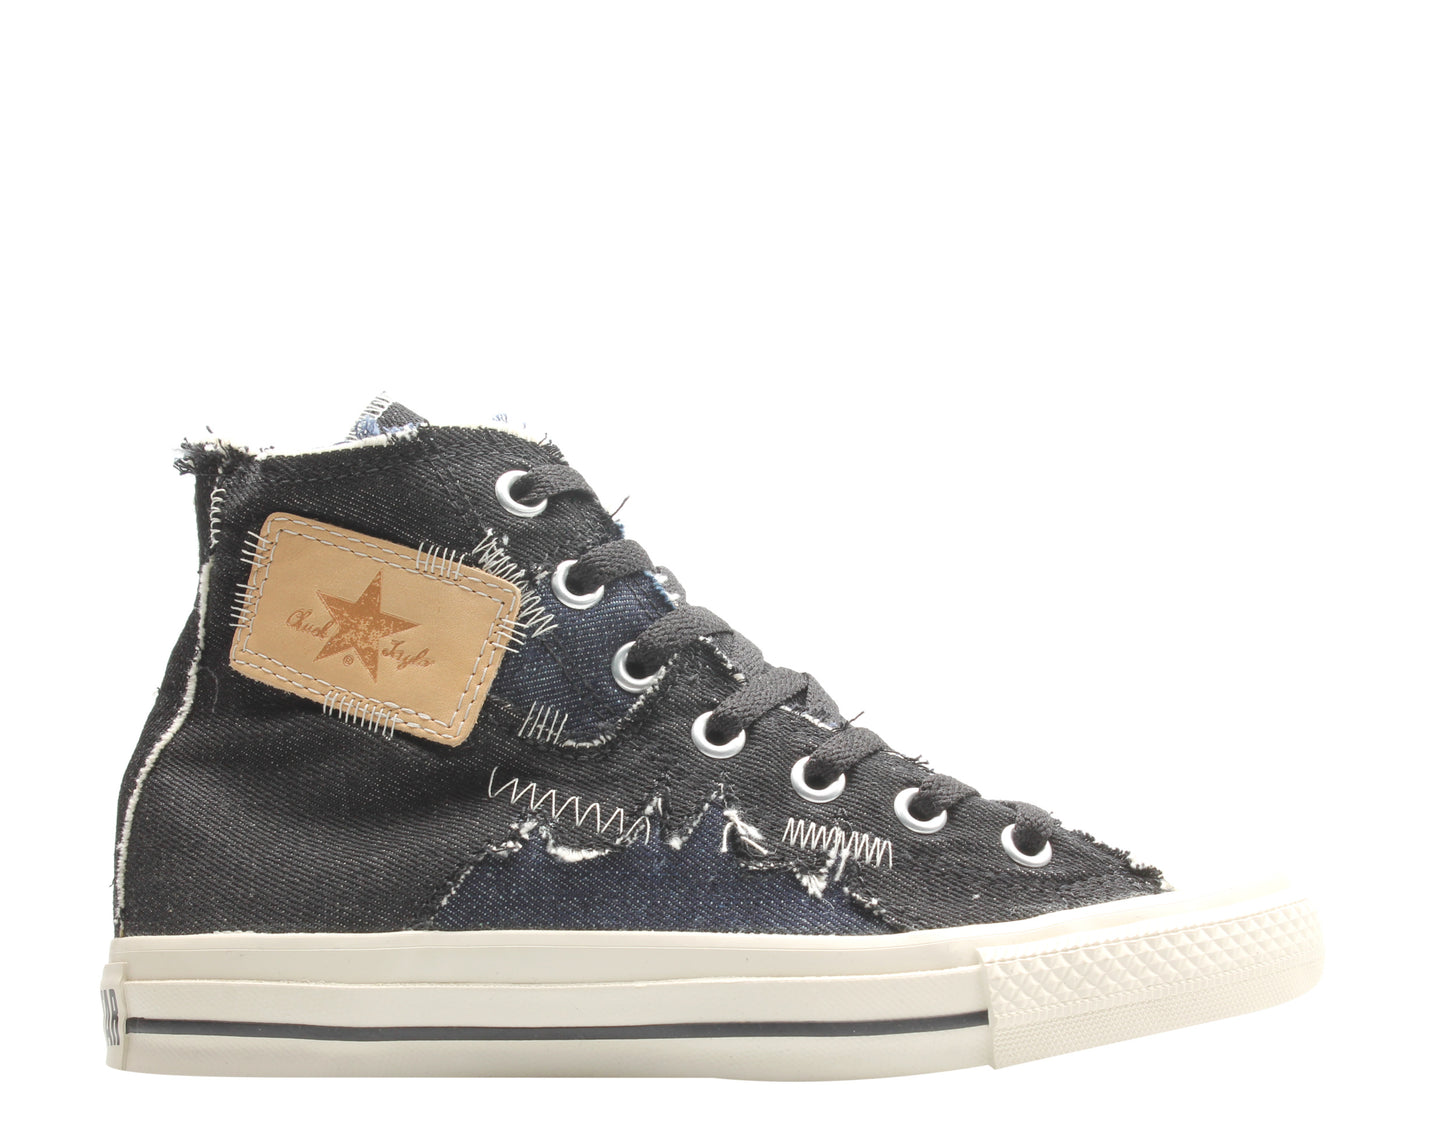 Converse Chuck Taylor All Star Denim Stitch Black/Charcoal High Top Sneakers 1X071